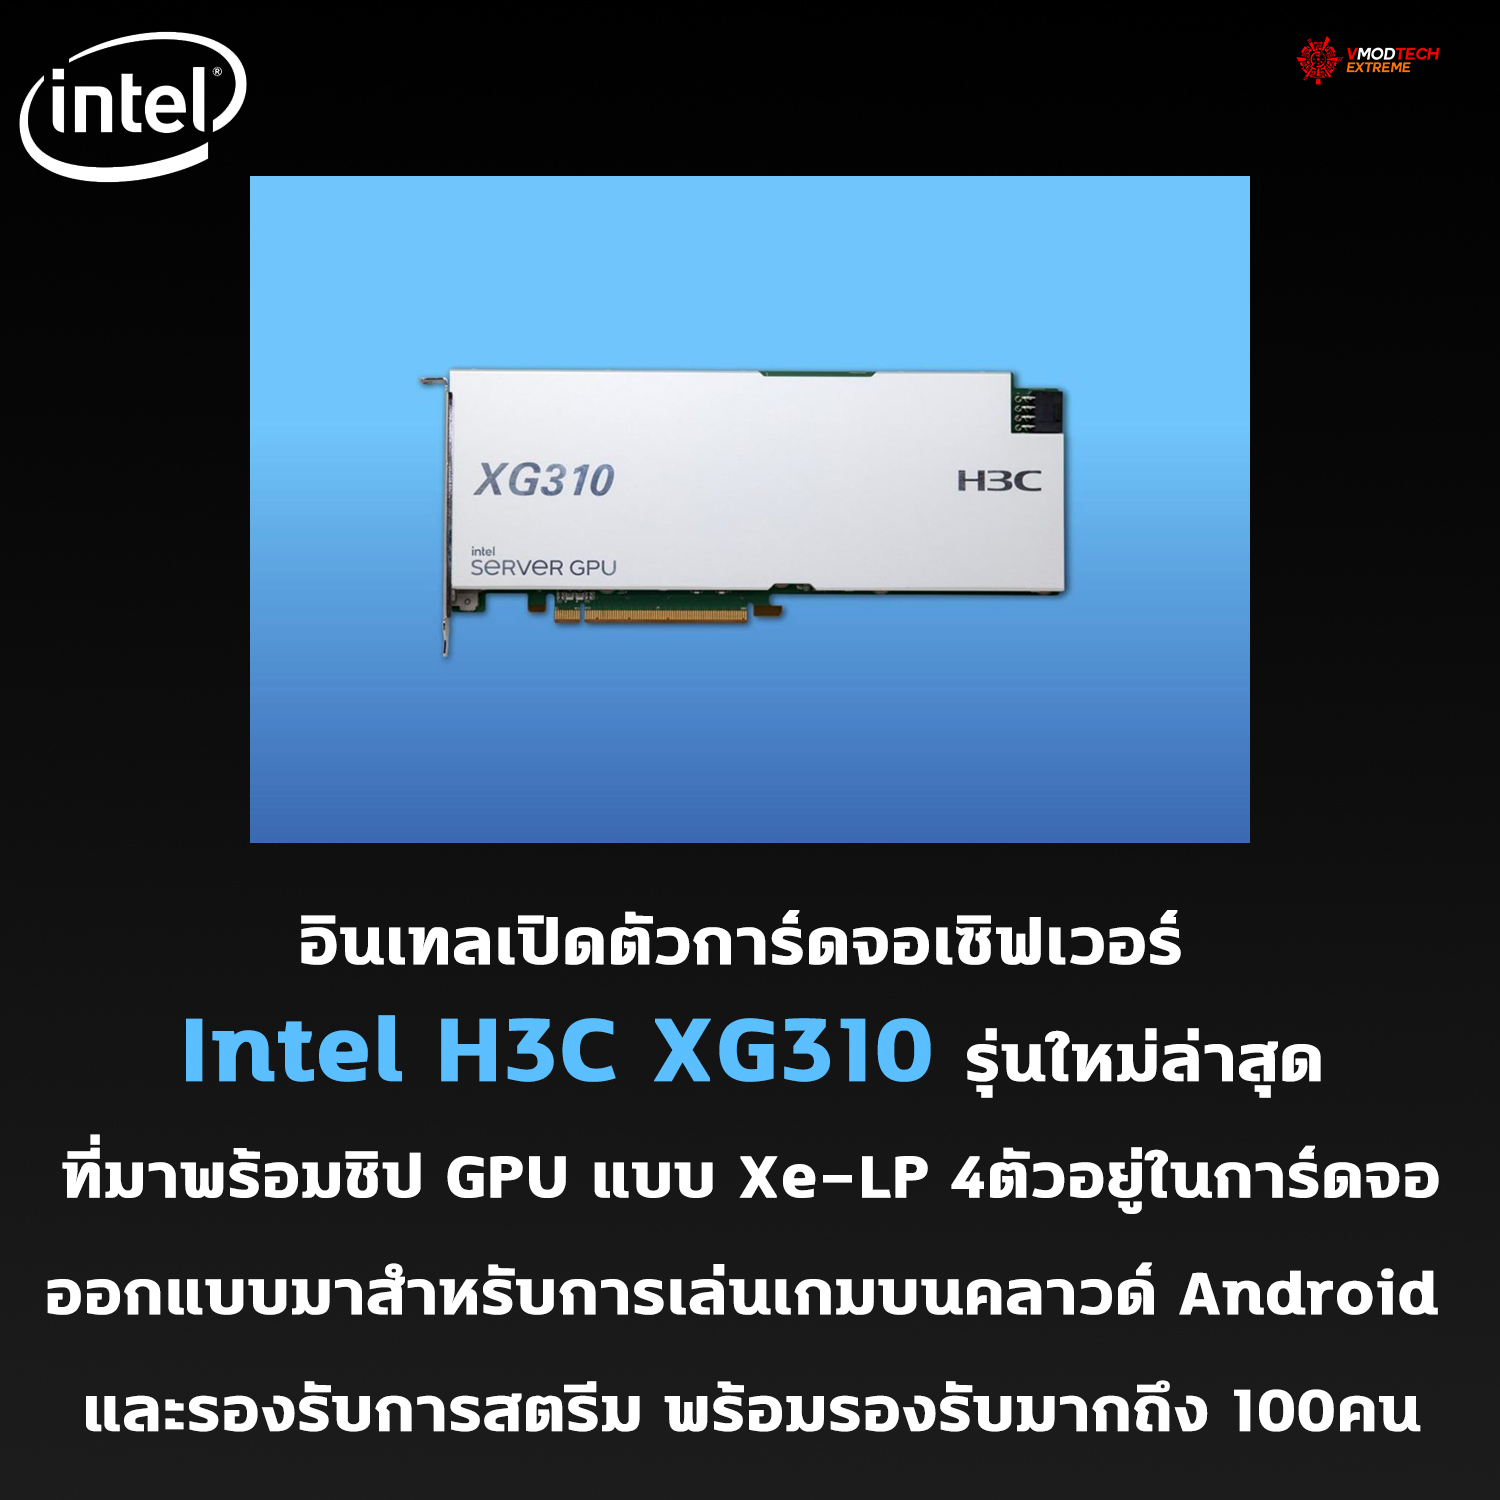 intel h3c xg310 อินเทลเปิดตัวการ์ดจอเซิฟเวอร์ Intel H3C XG310 รุ่นใหม่ล่าสุดที่มาพร้อมชิป GPU แบบ Xe LP 4ตัวอยู่ในการ์ดจอ